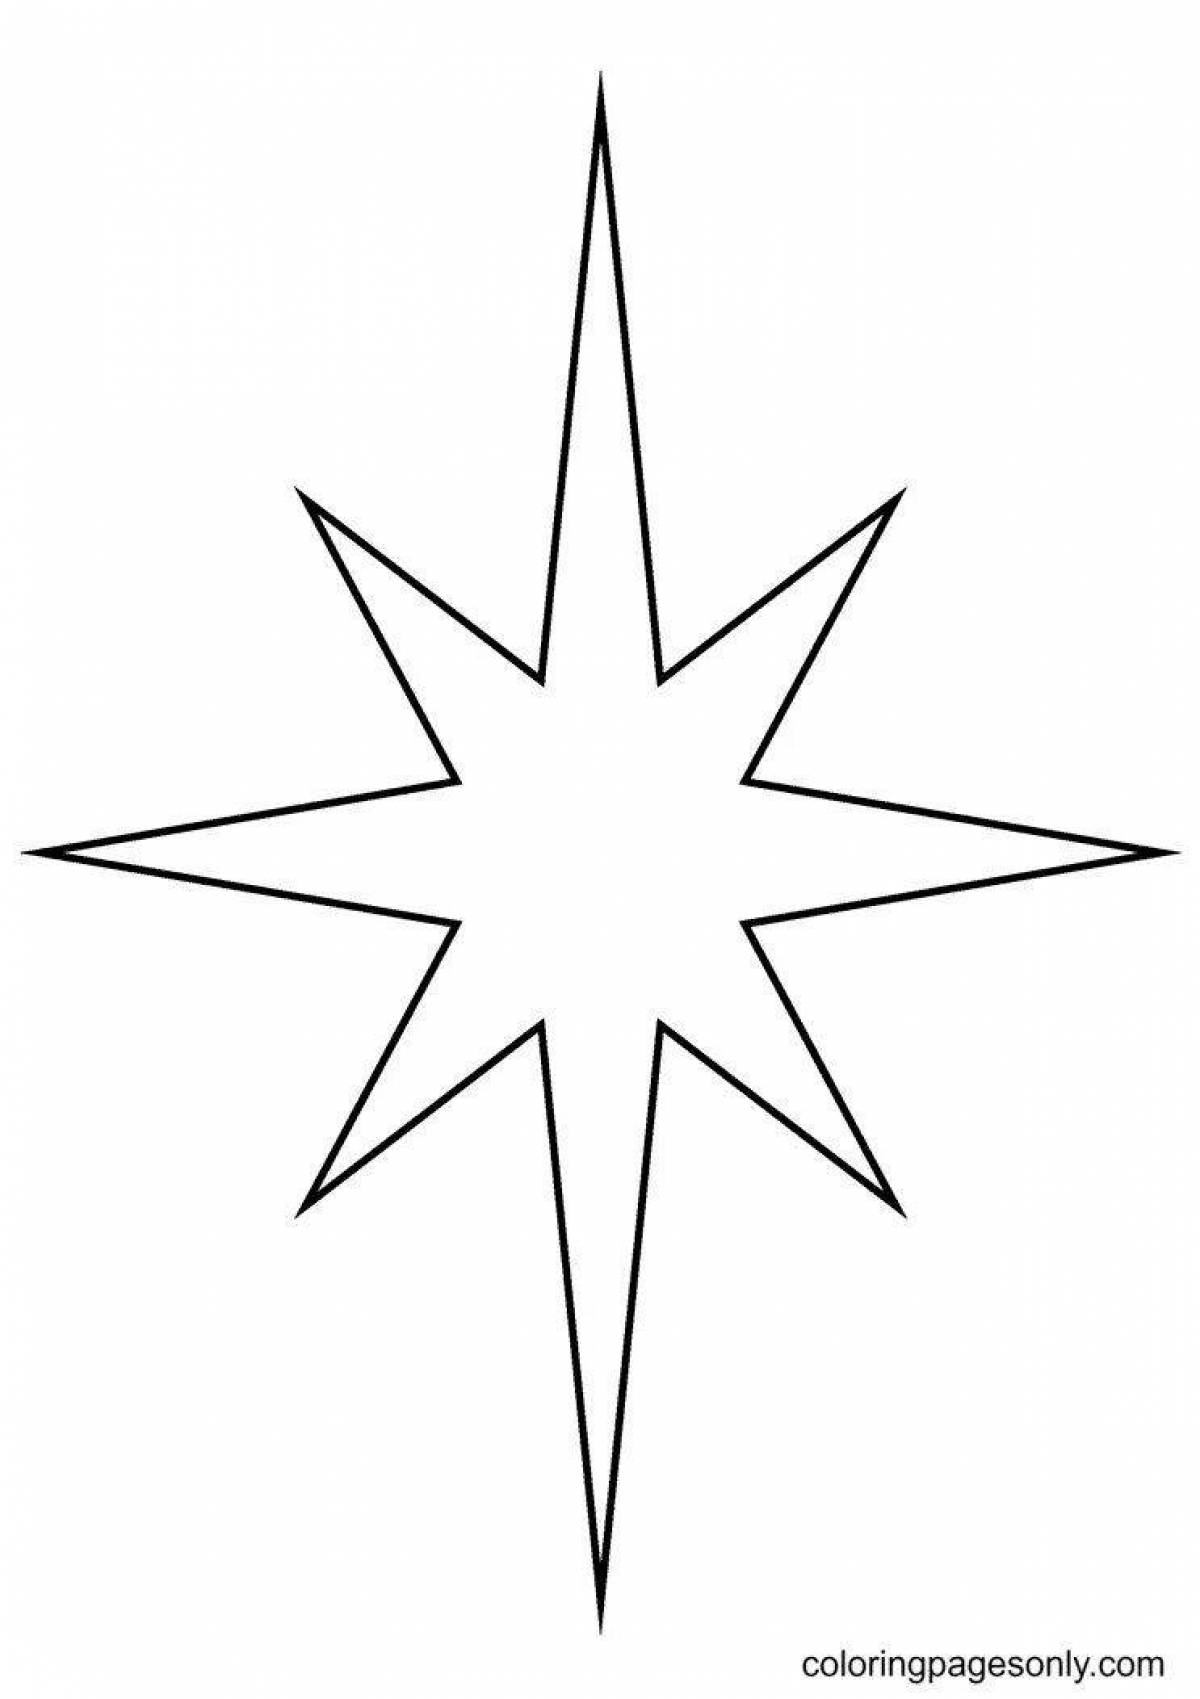 Fabulous coloring star of Bethlehem drawing